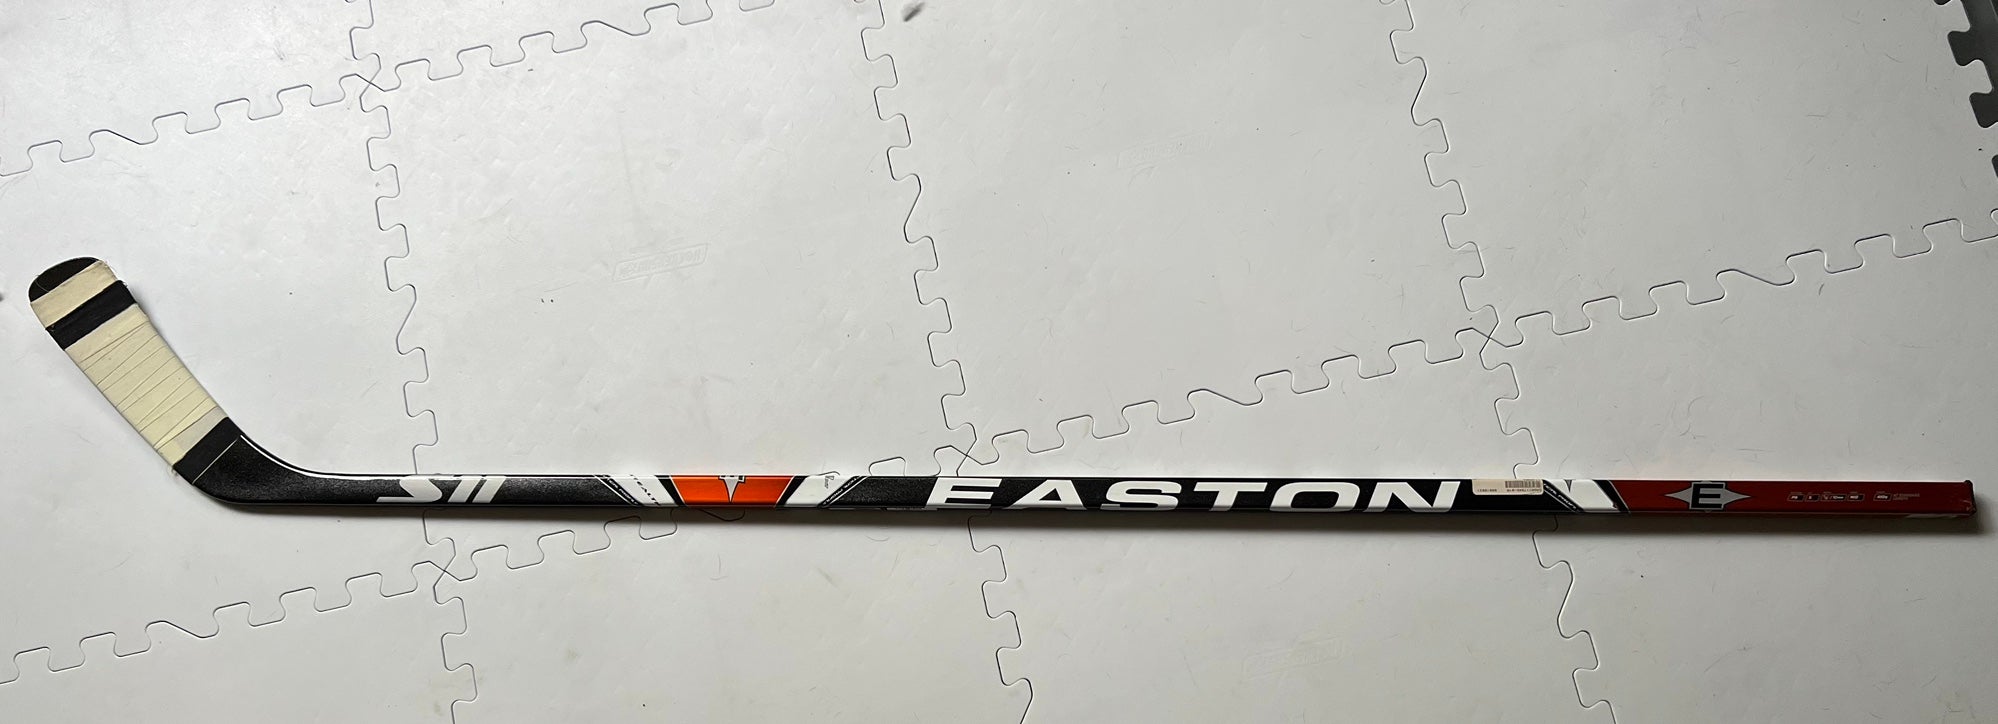 s17 hockey stick